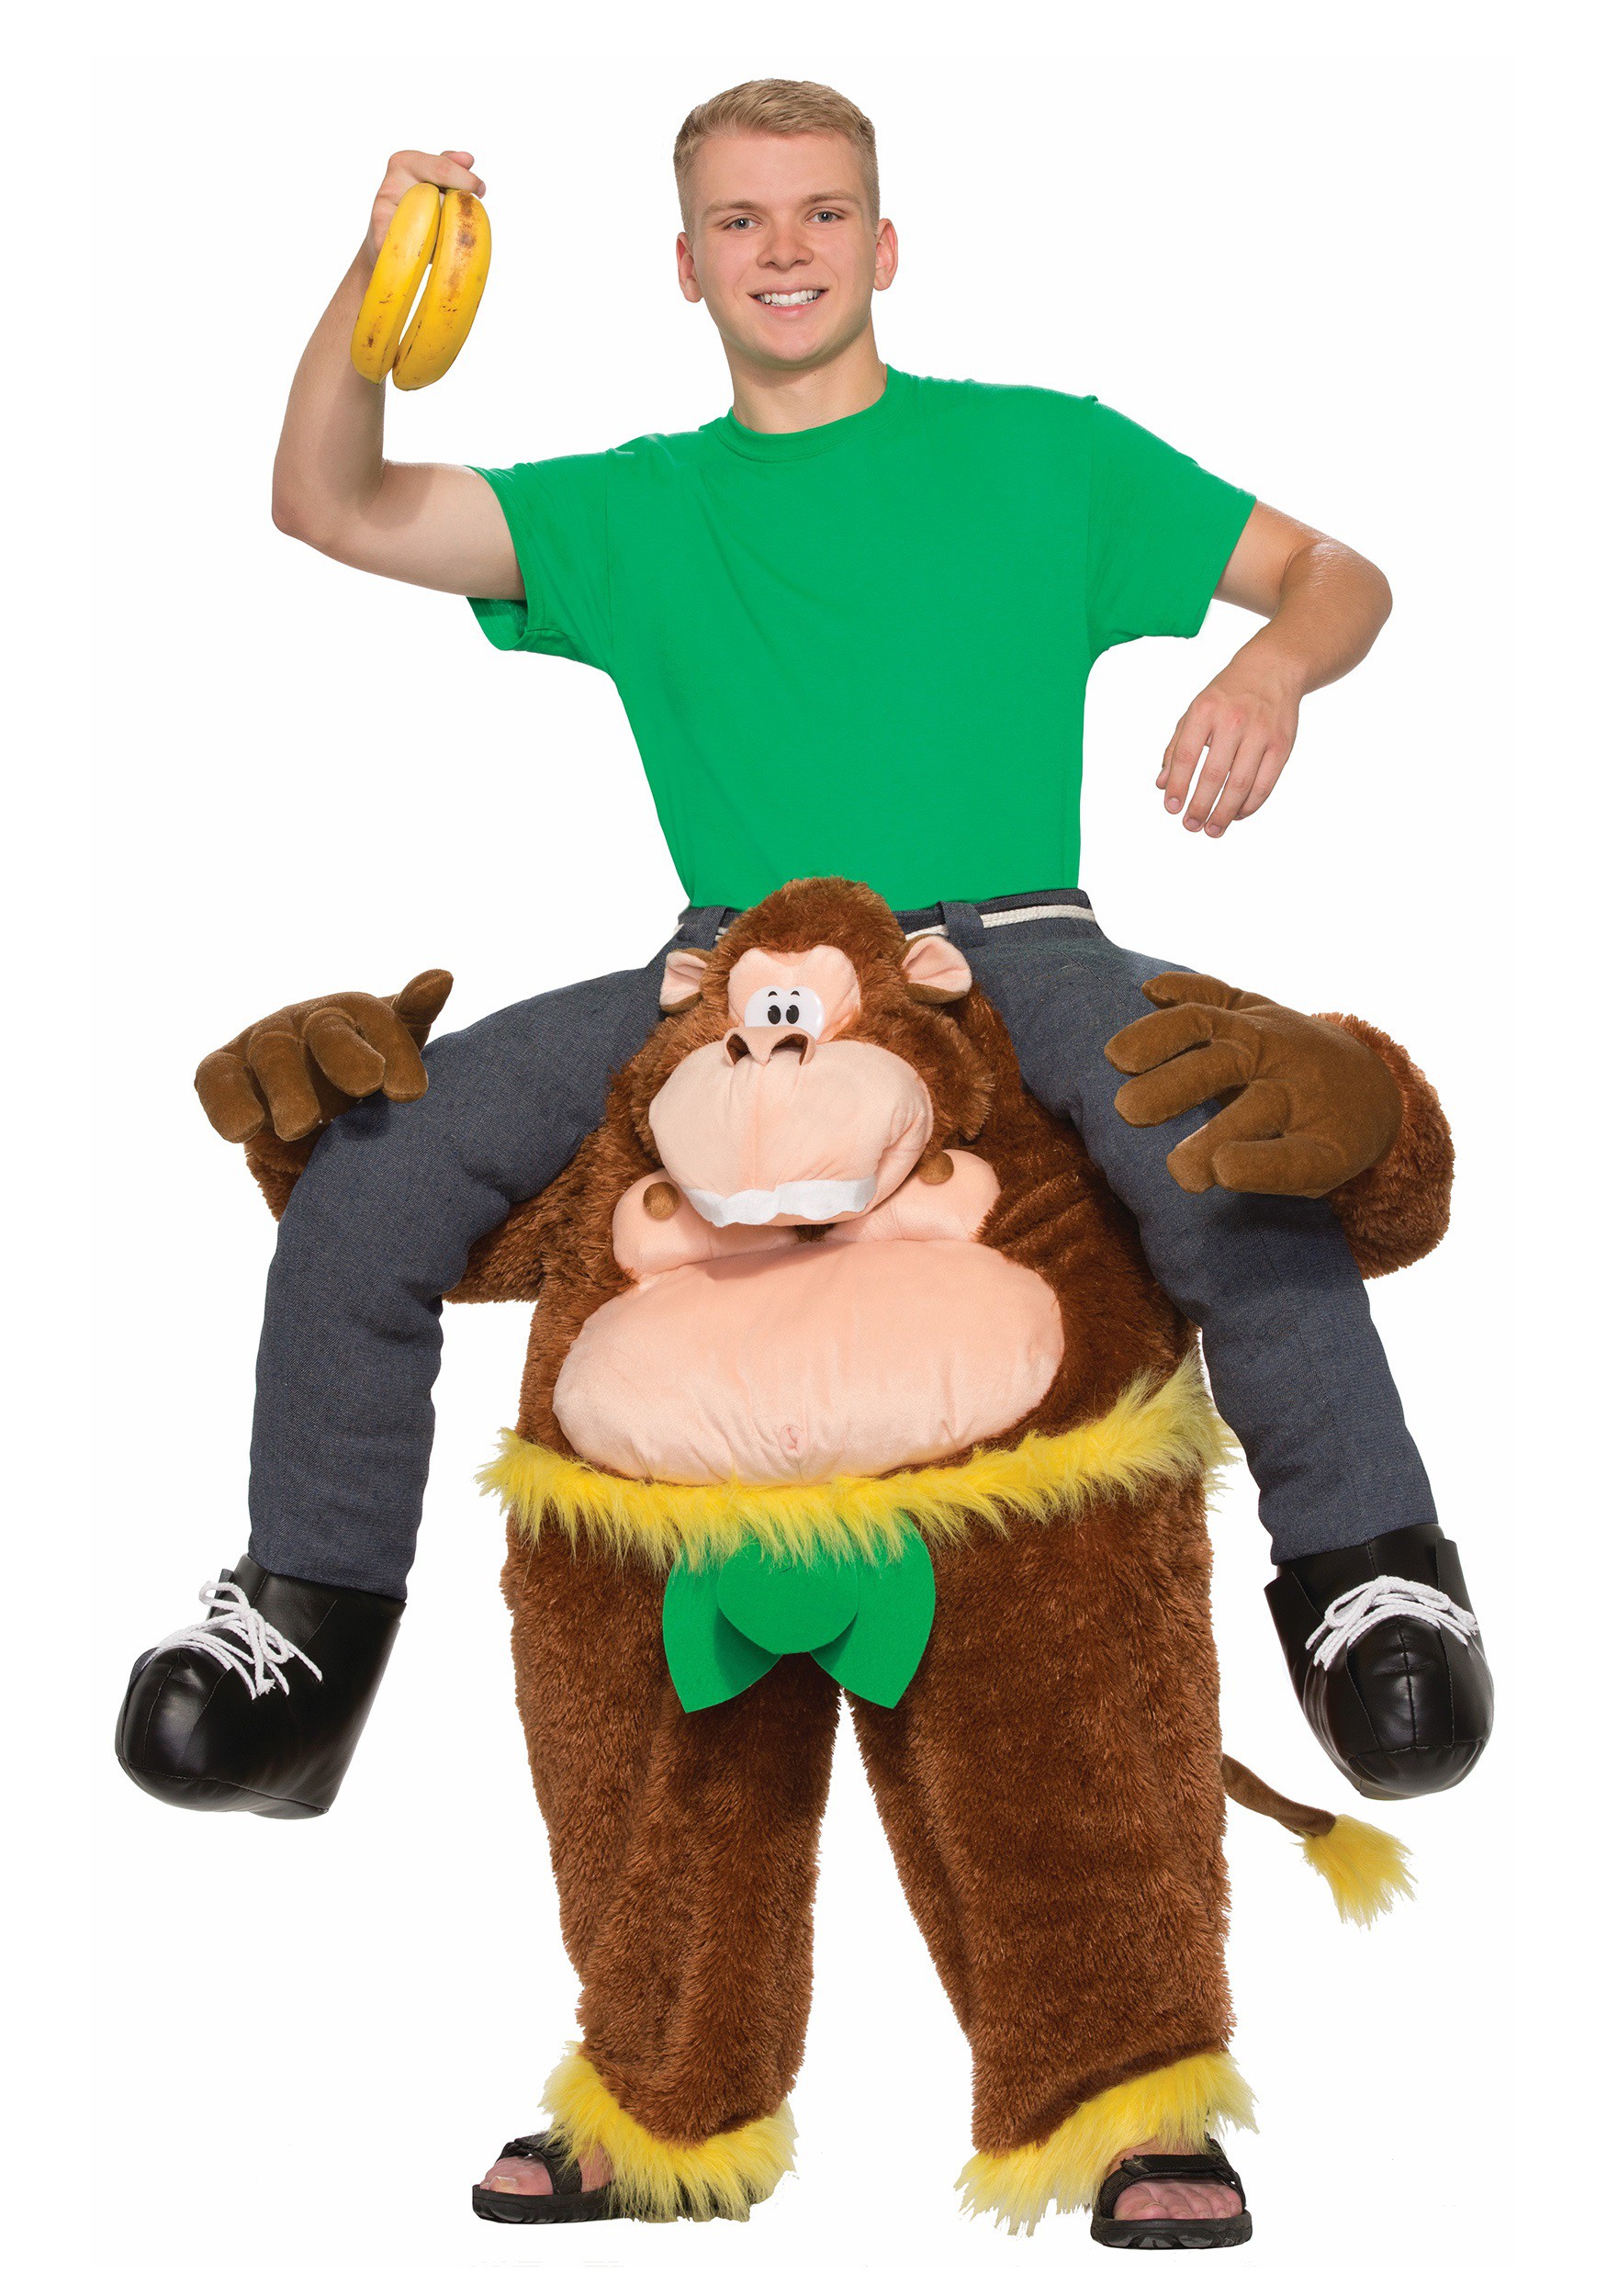 Adult Ride On Monkey Costume